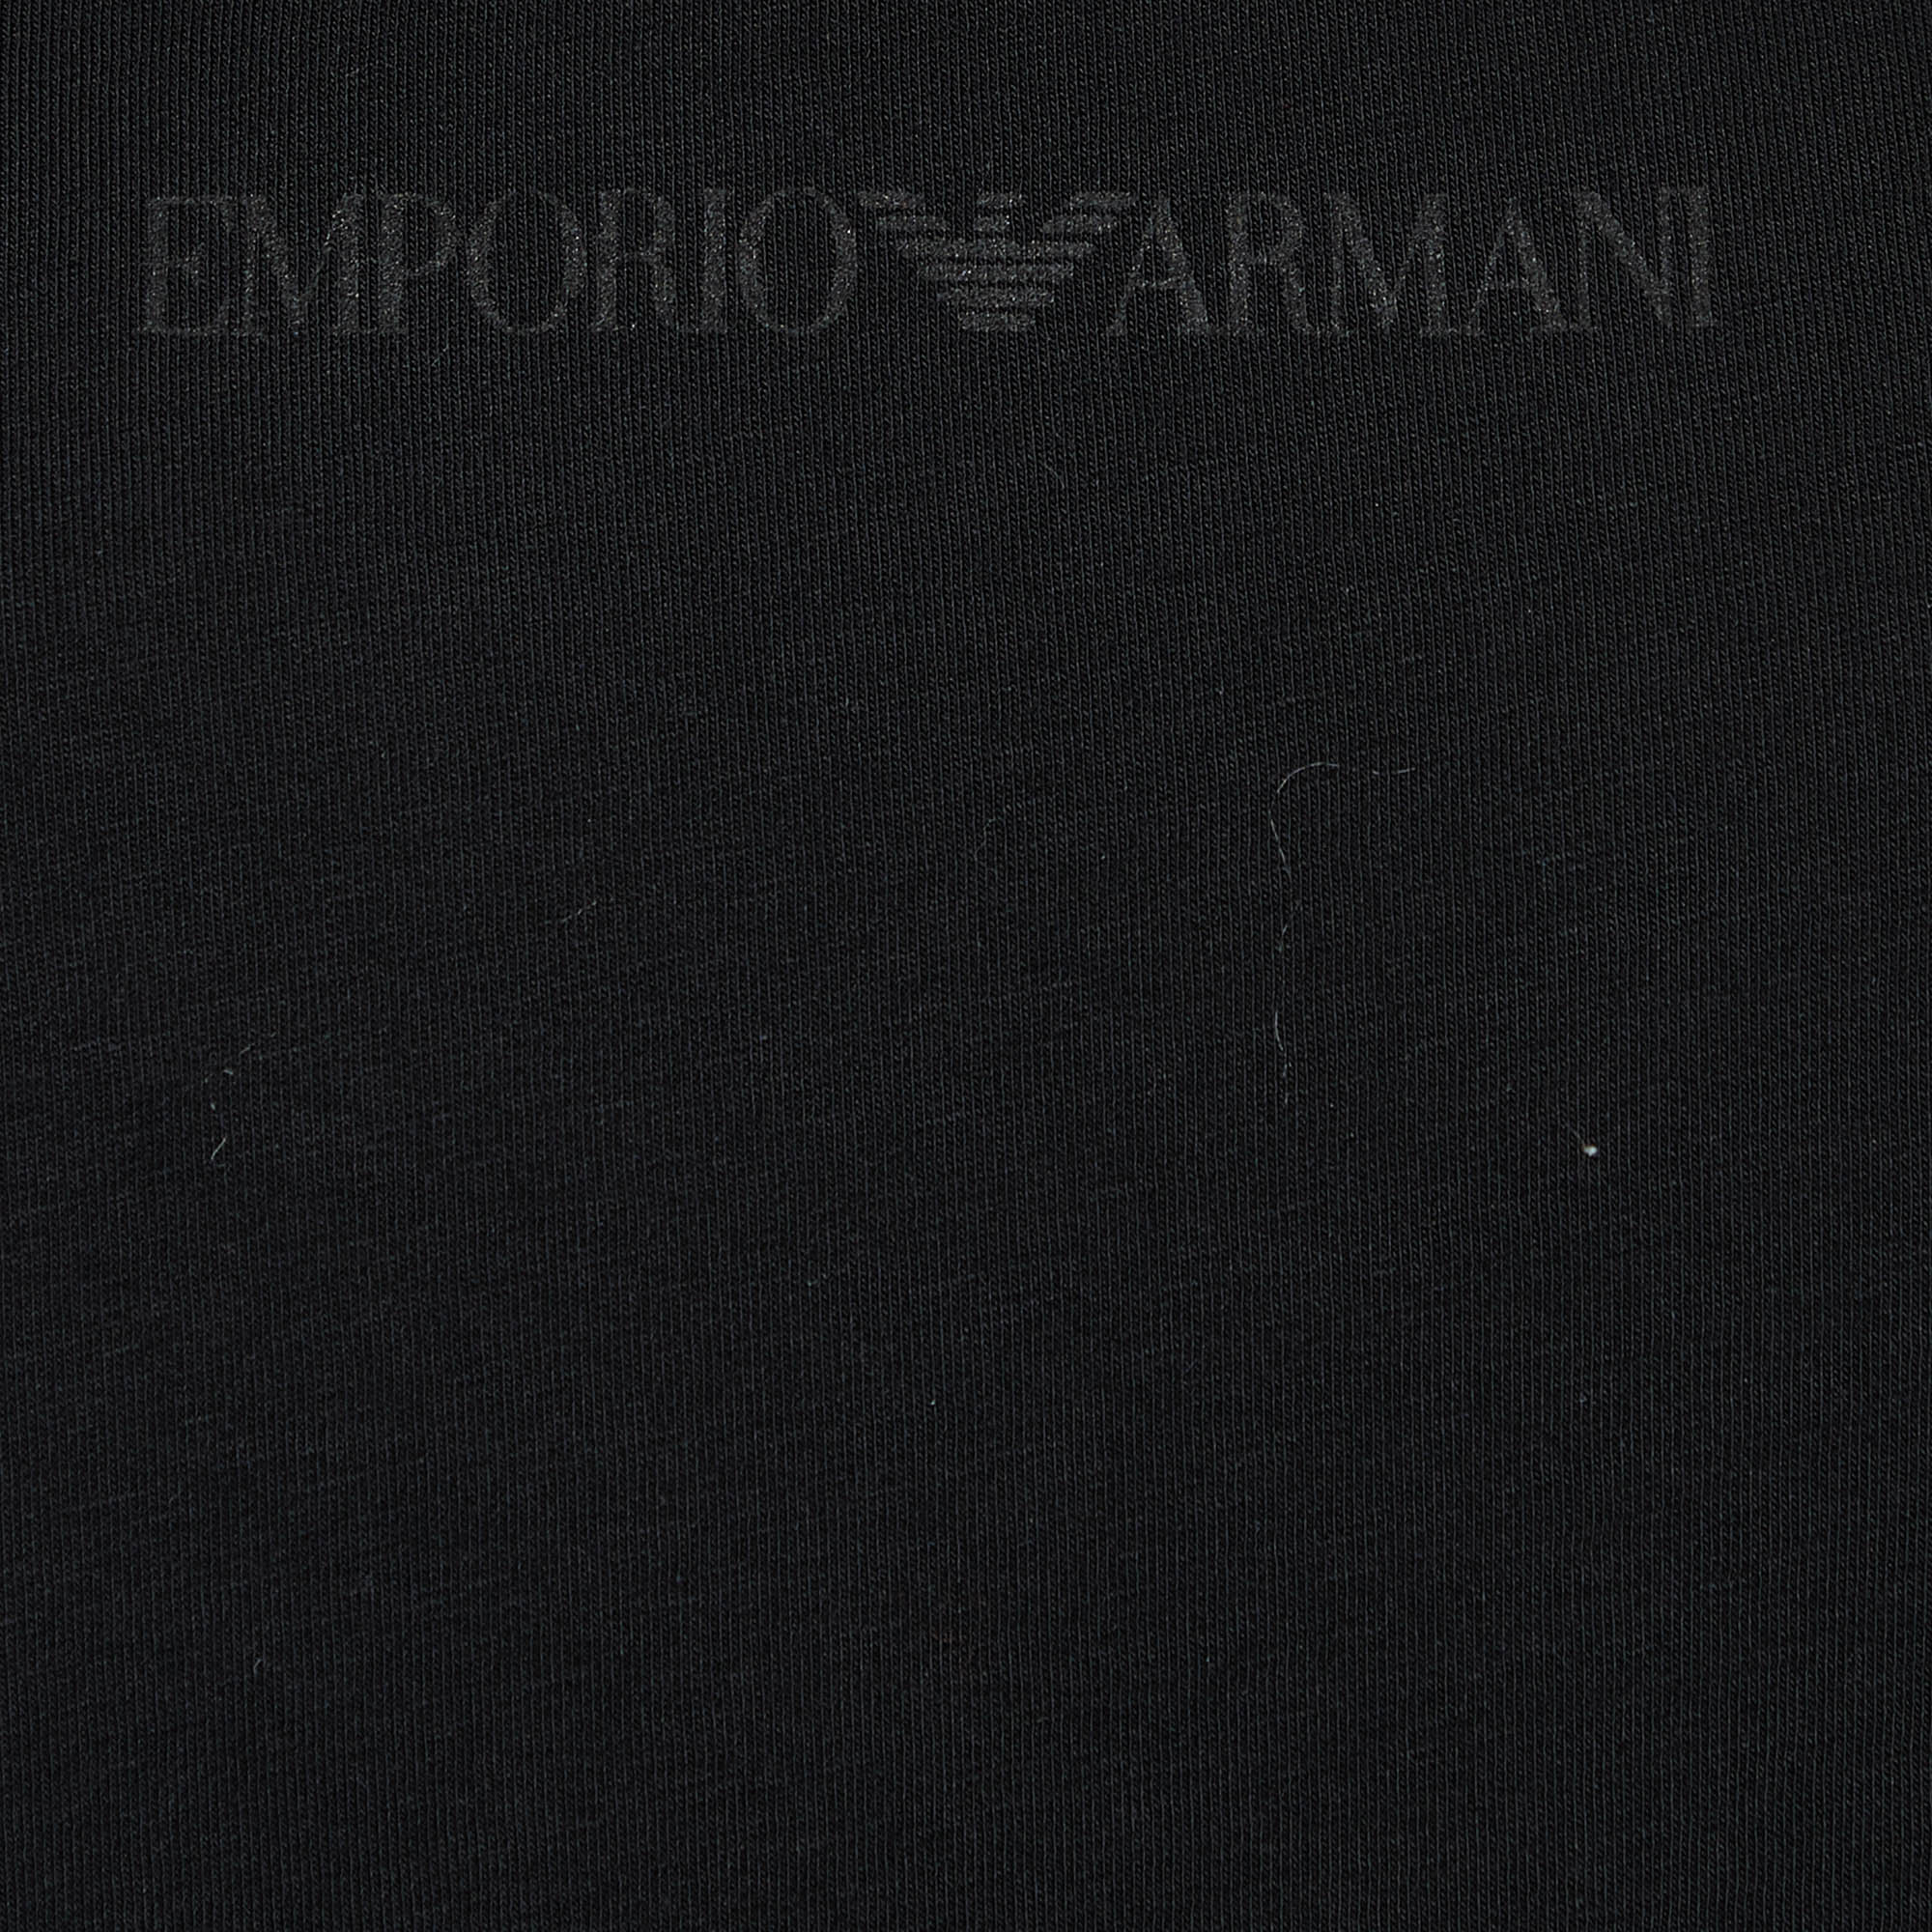 Emporio Armani Black Printed Cotton Knit T-Shirt S